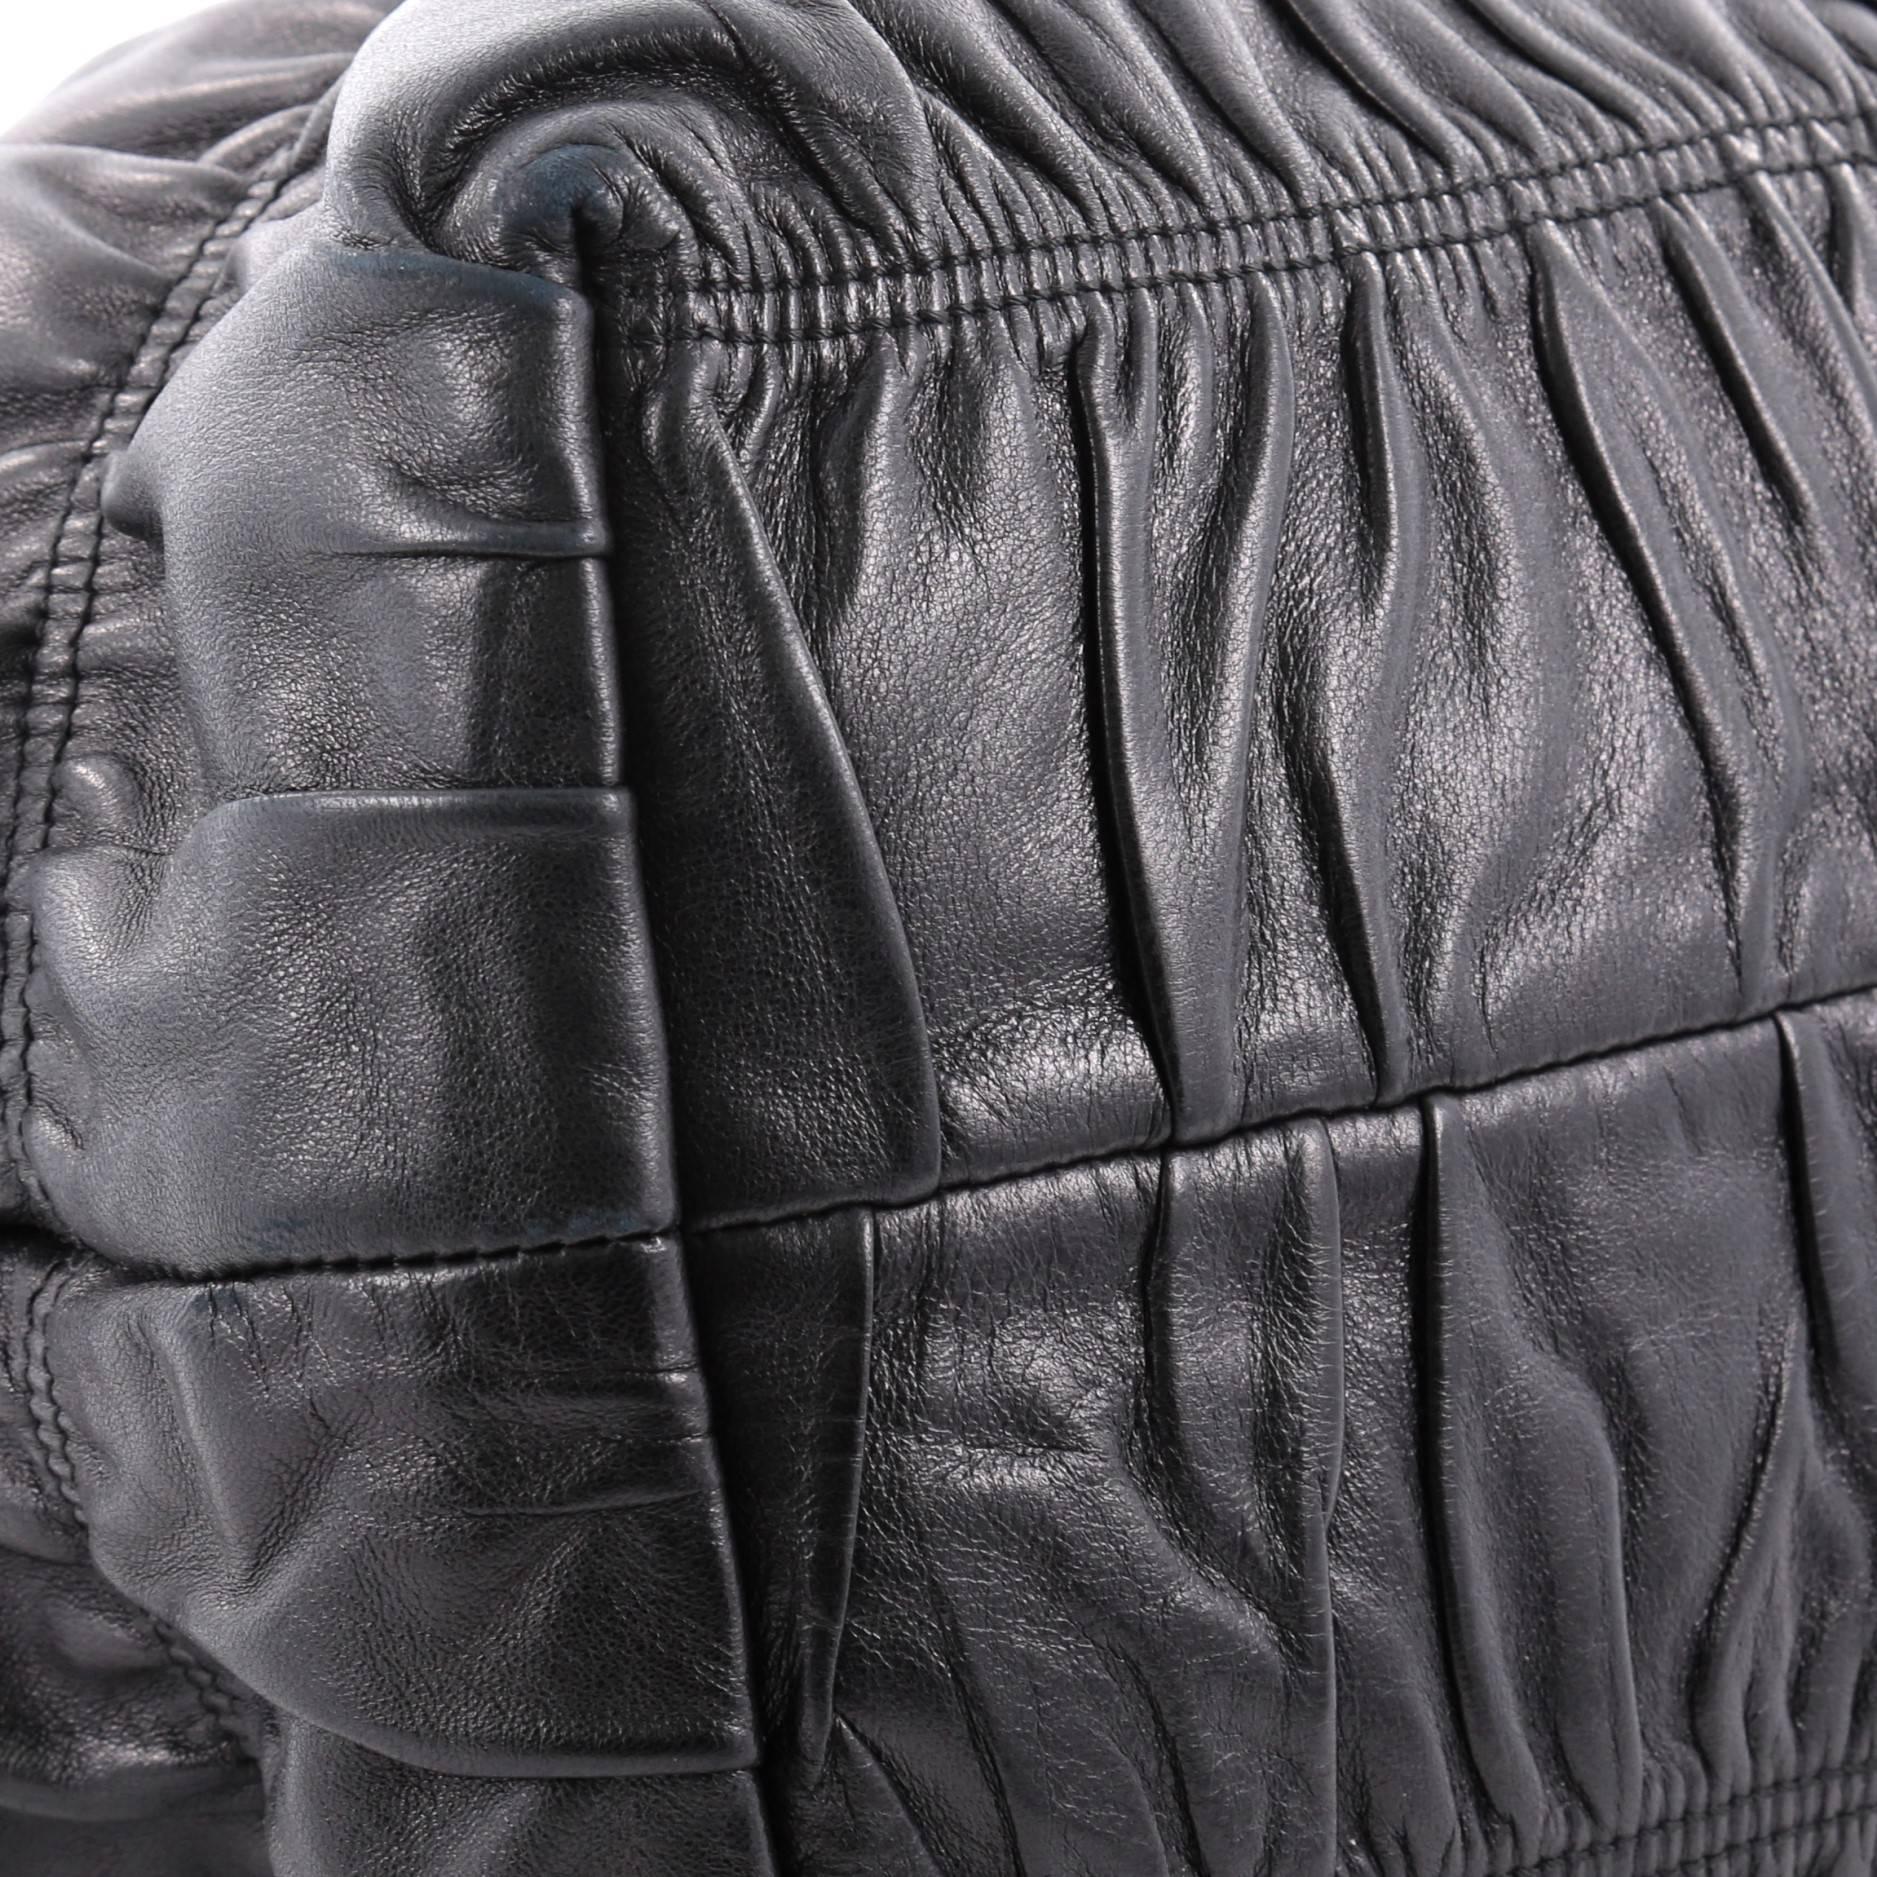  Prada Gaufre Tote Nappa Leather Large 3